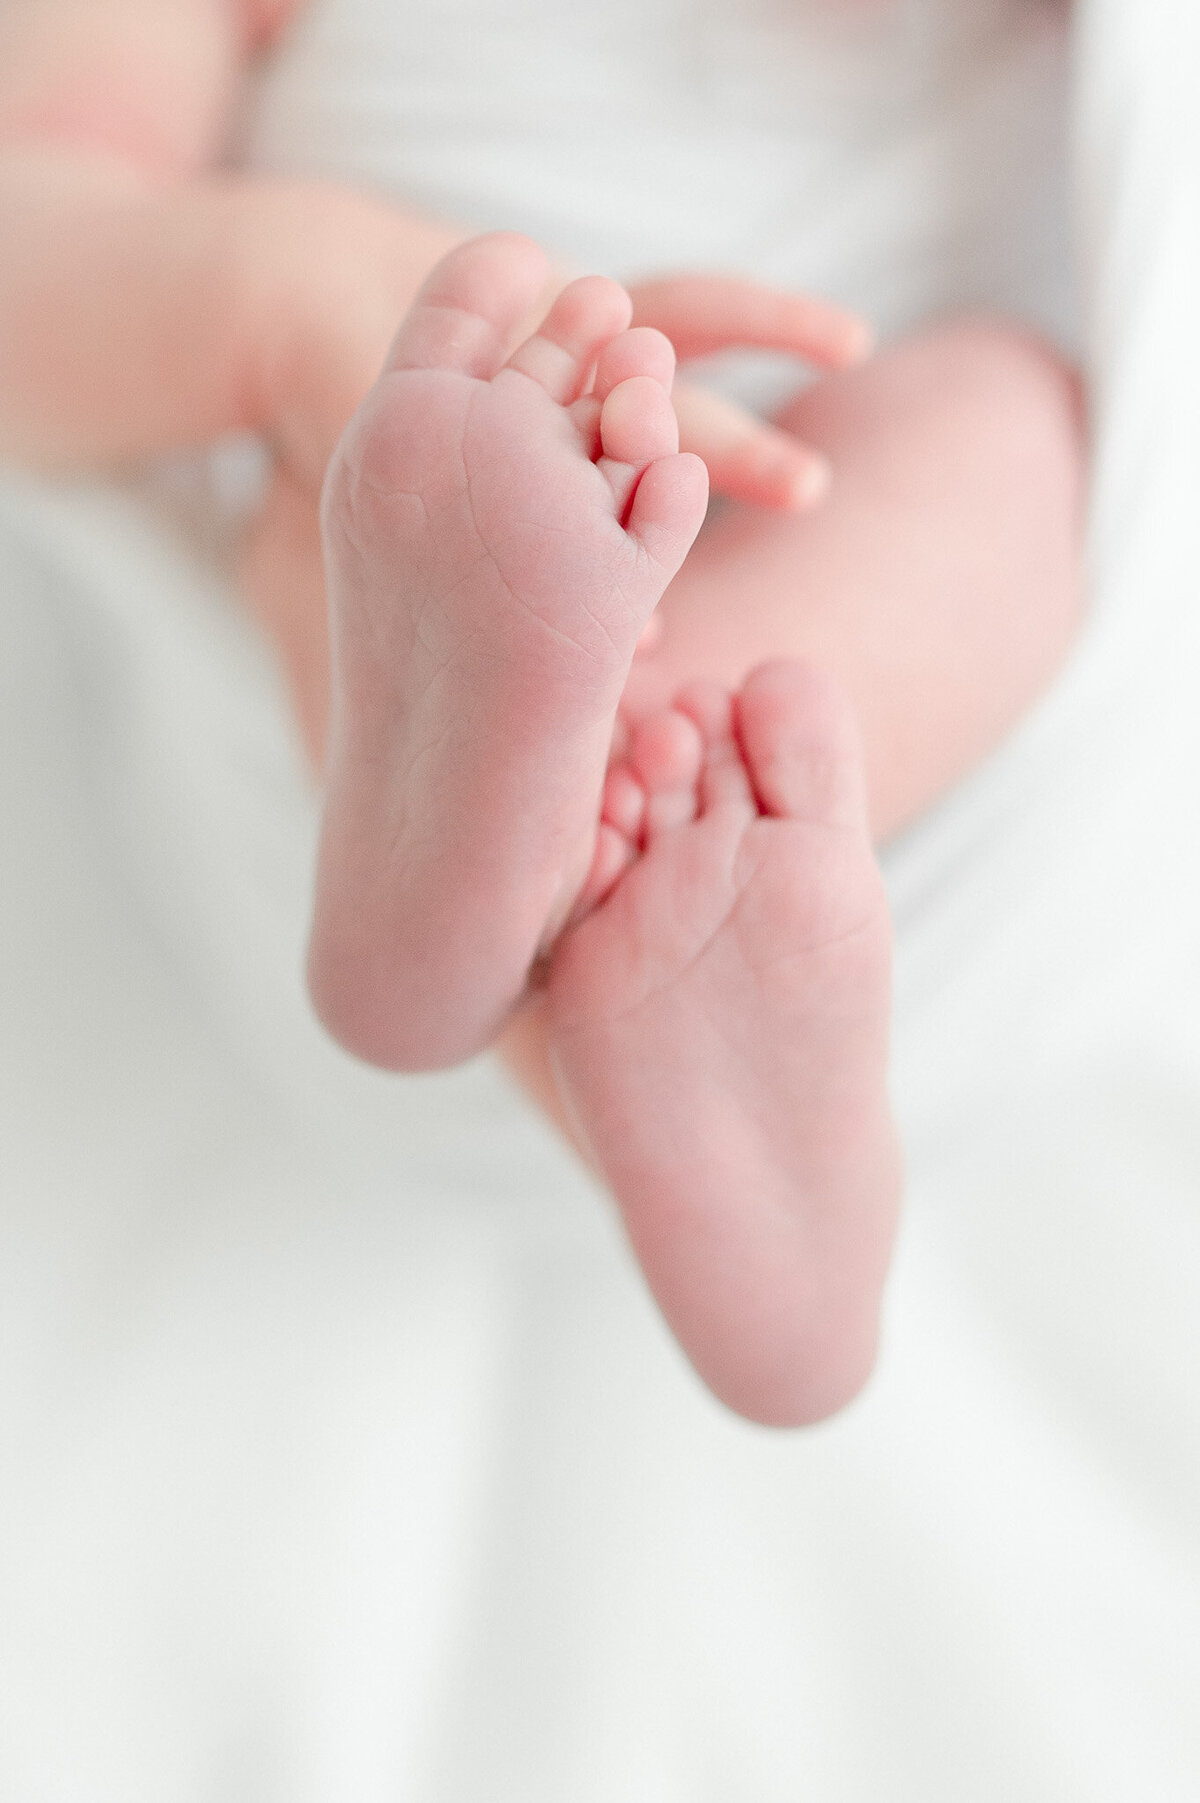 newborn baby feet in Kristie Lloyd's Nashville newborn photographer studio